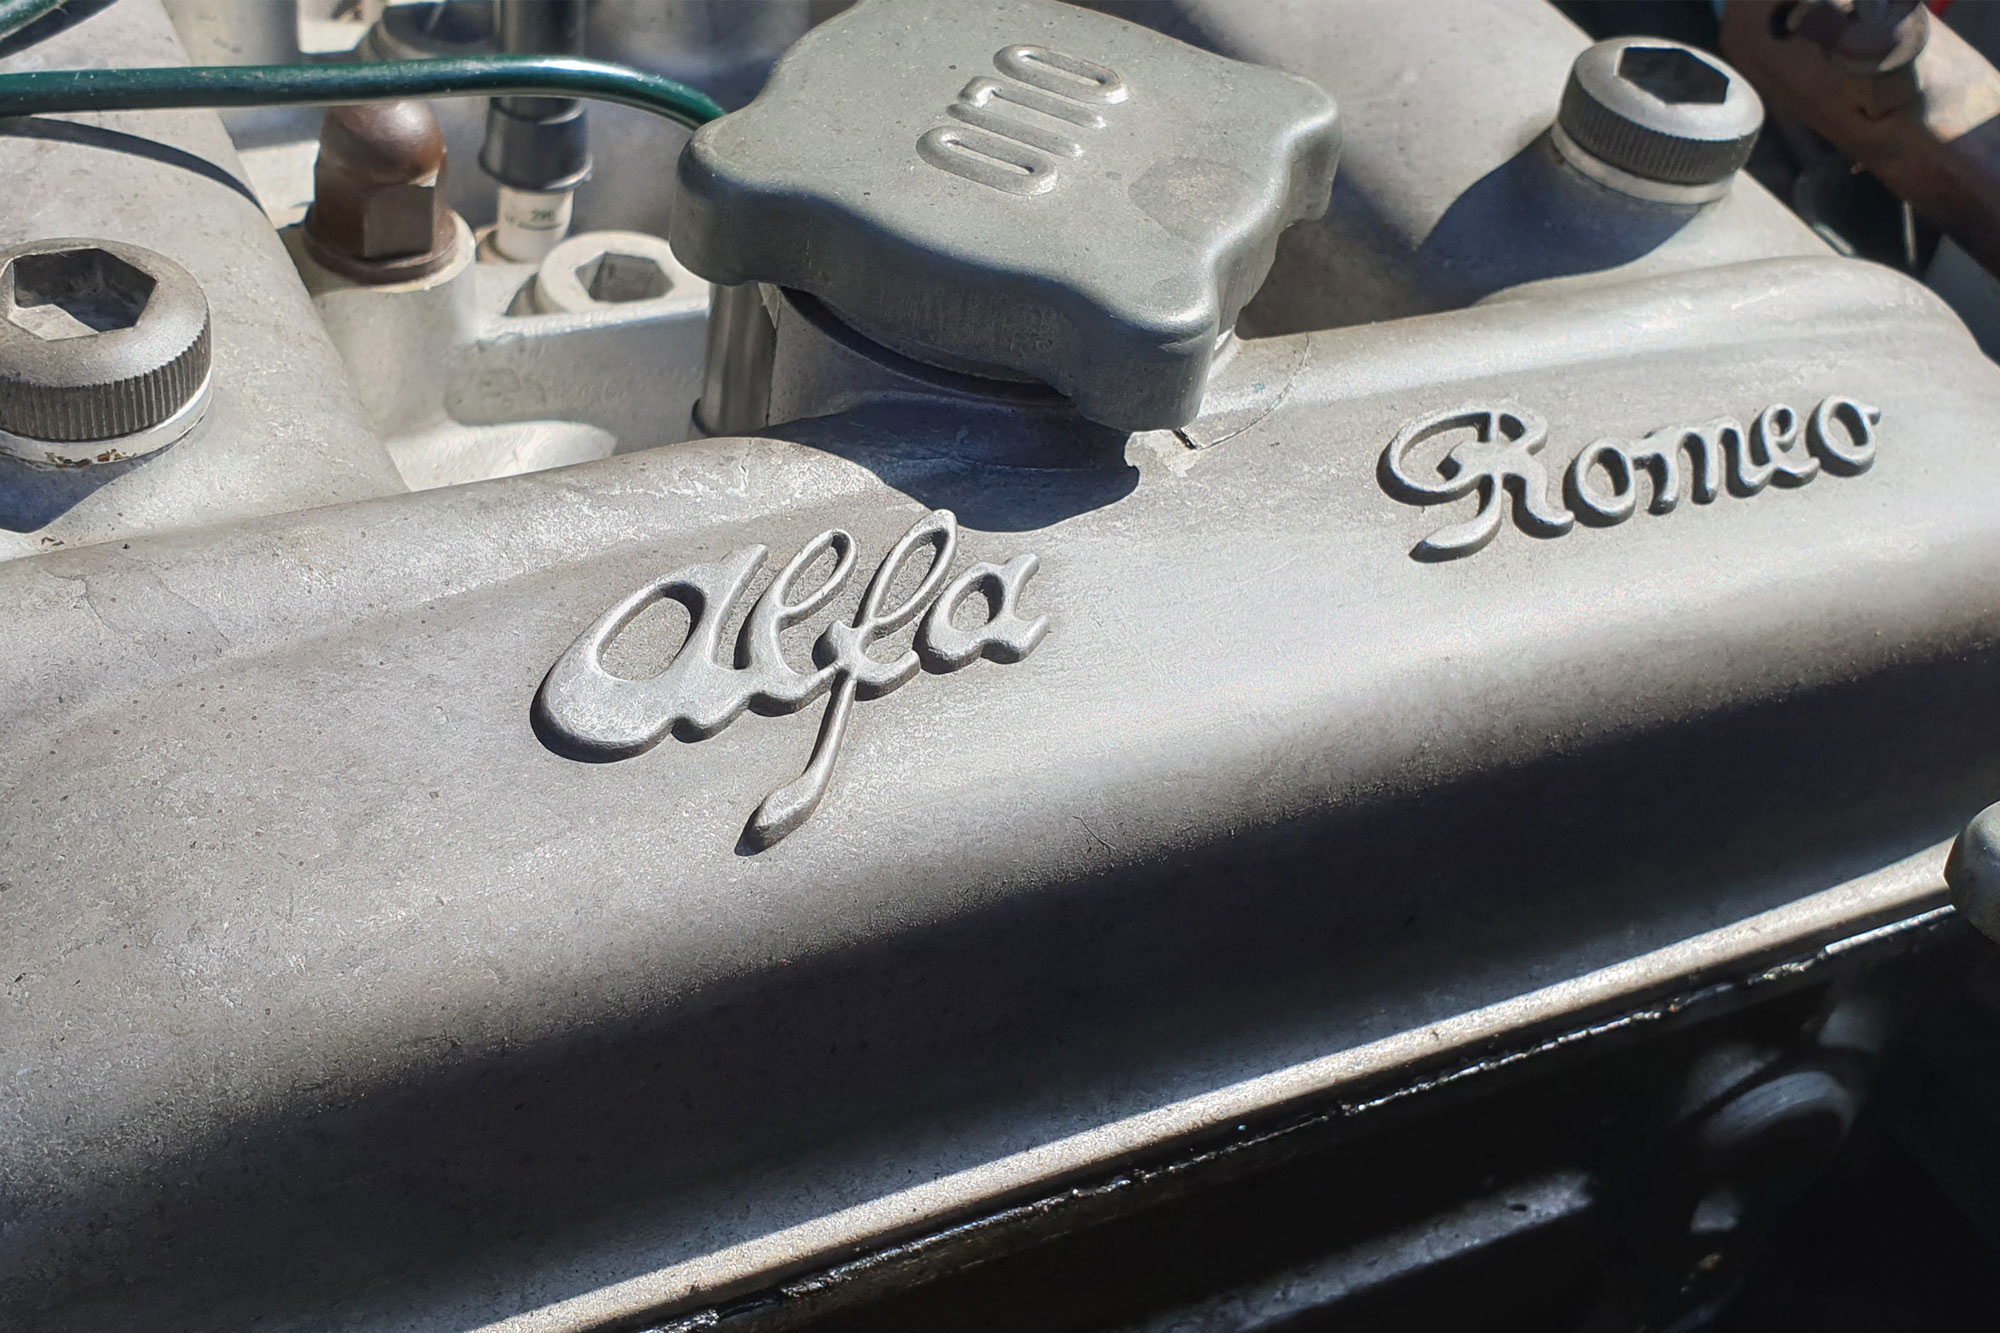 Bialbero, ο κινητήρας «φετίχ» της Alfa Romeo